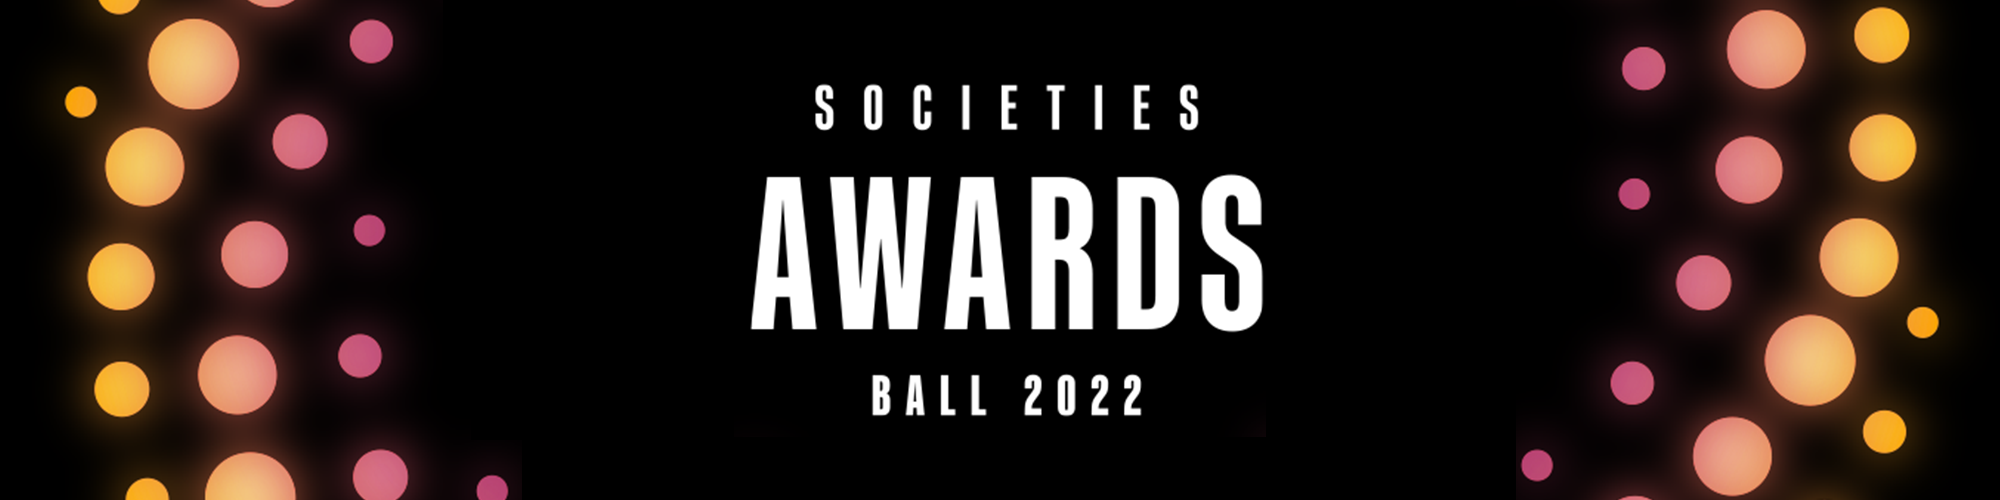 Societies Awards Ball 2022